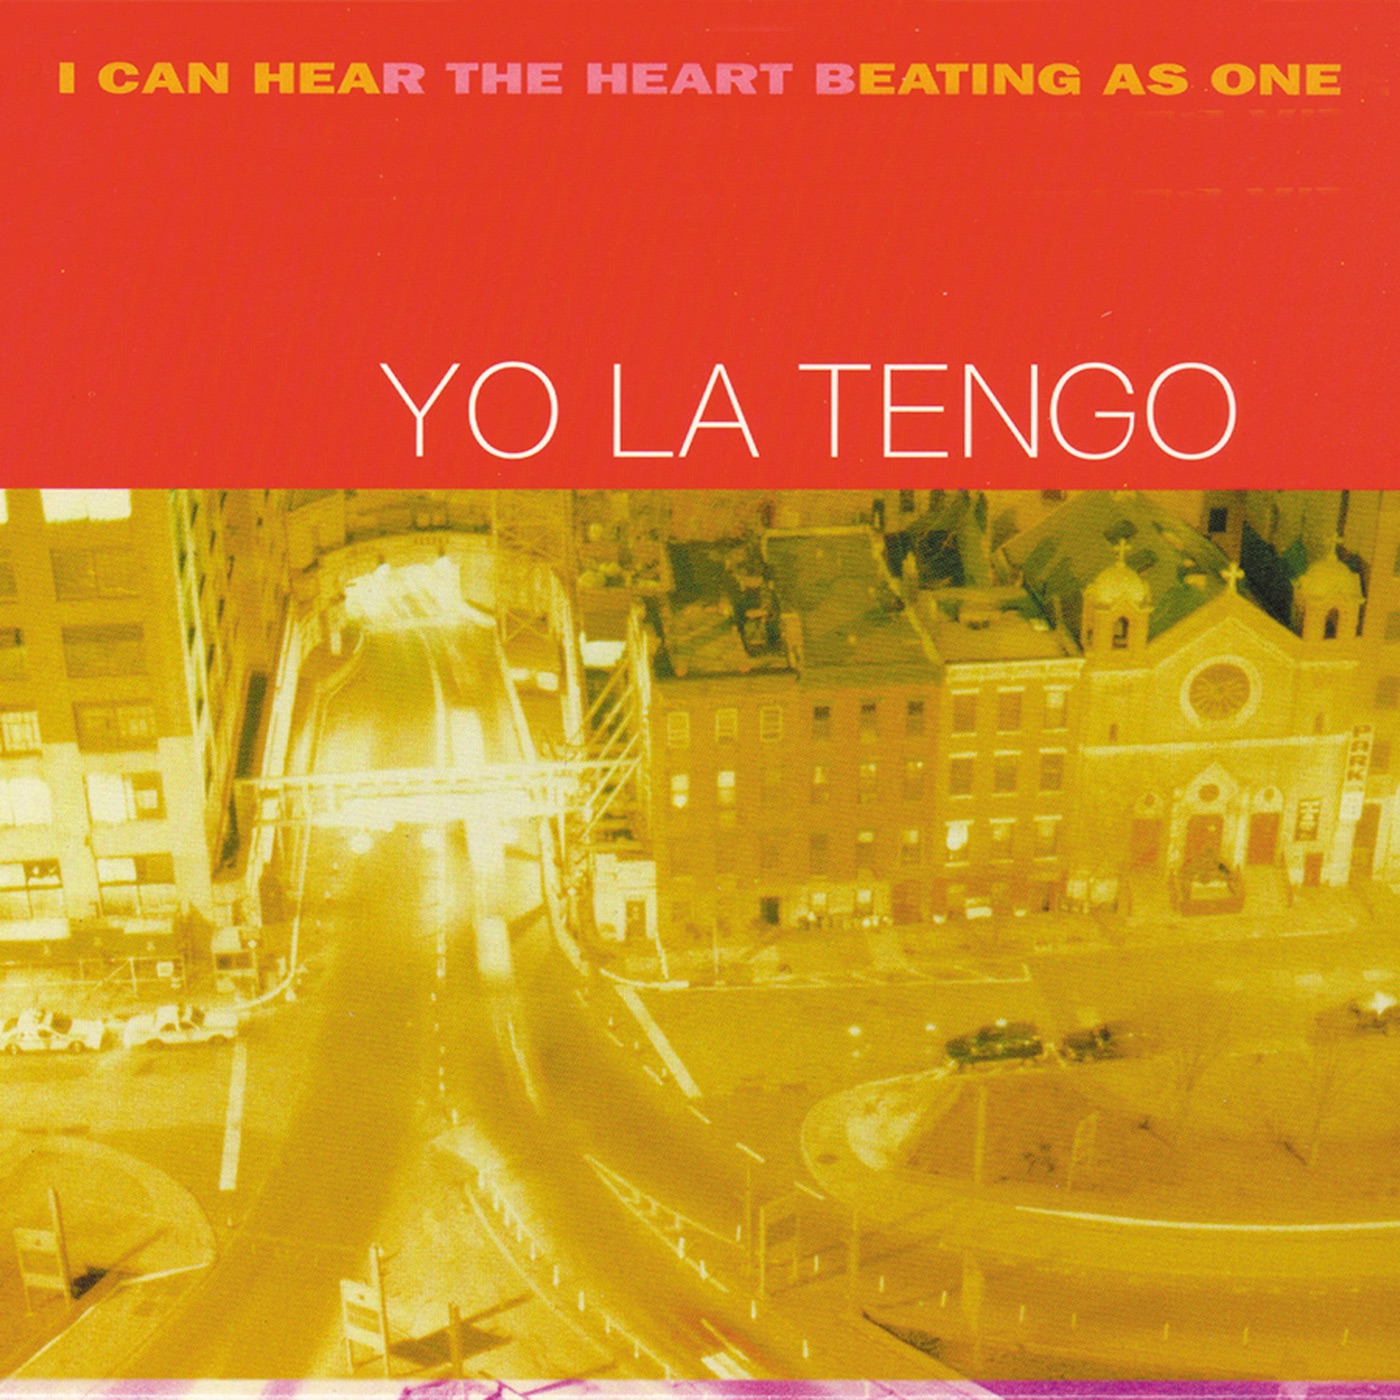 I Can Hear the Heart Beating As One by Yo La Tengo